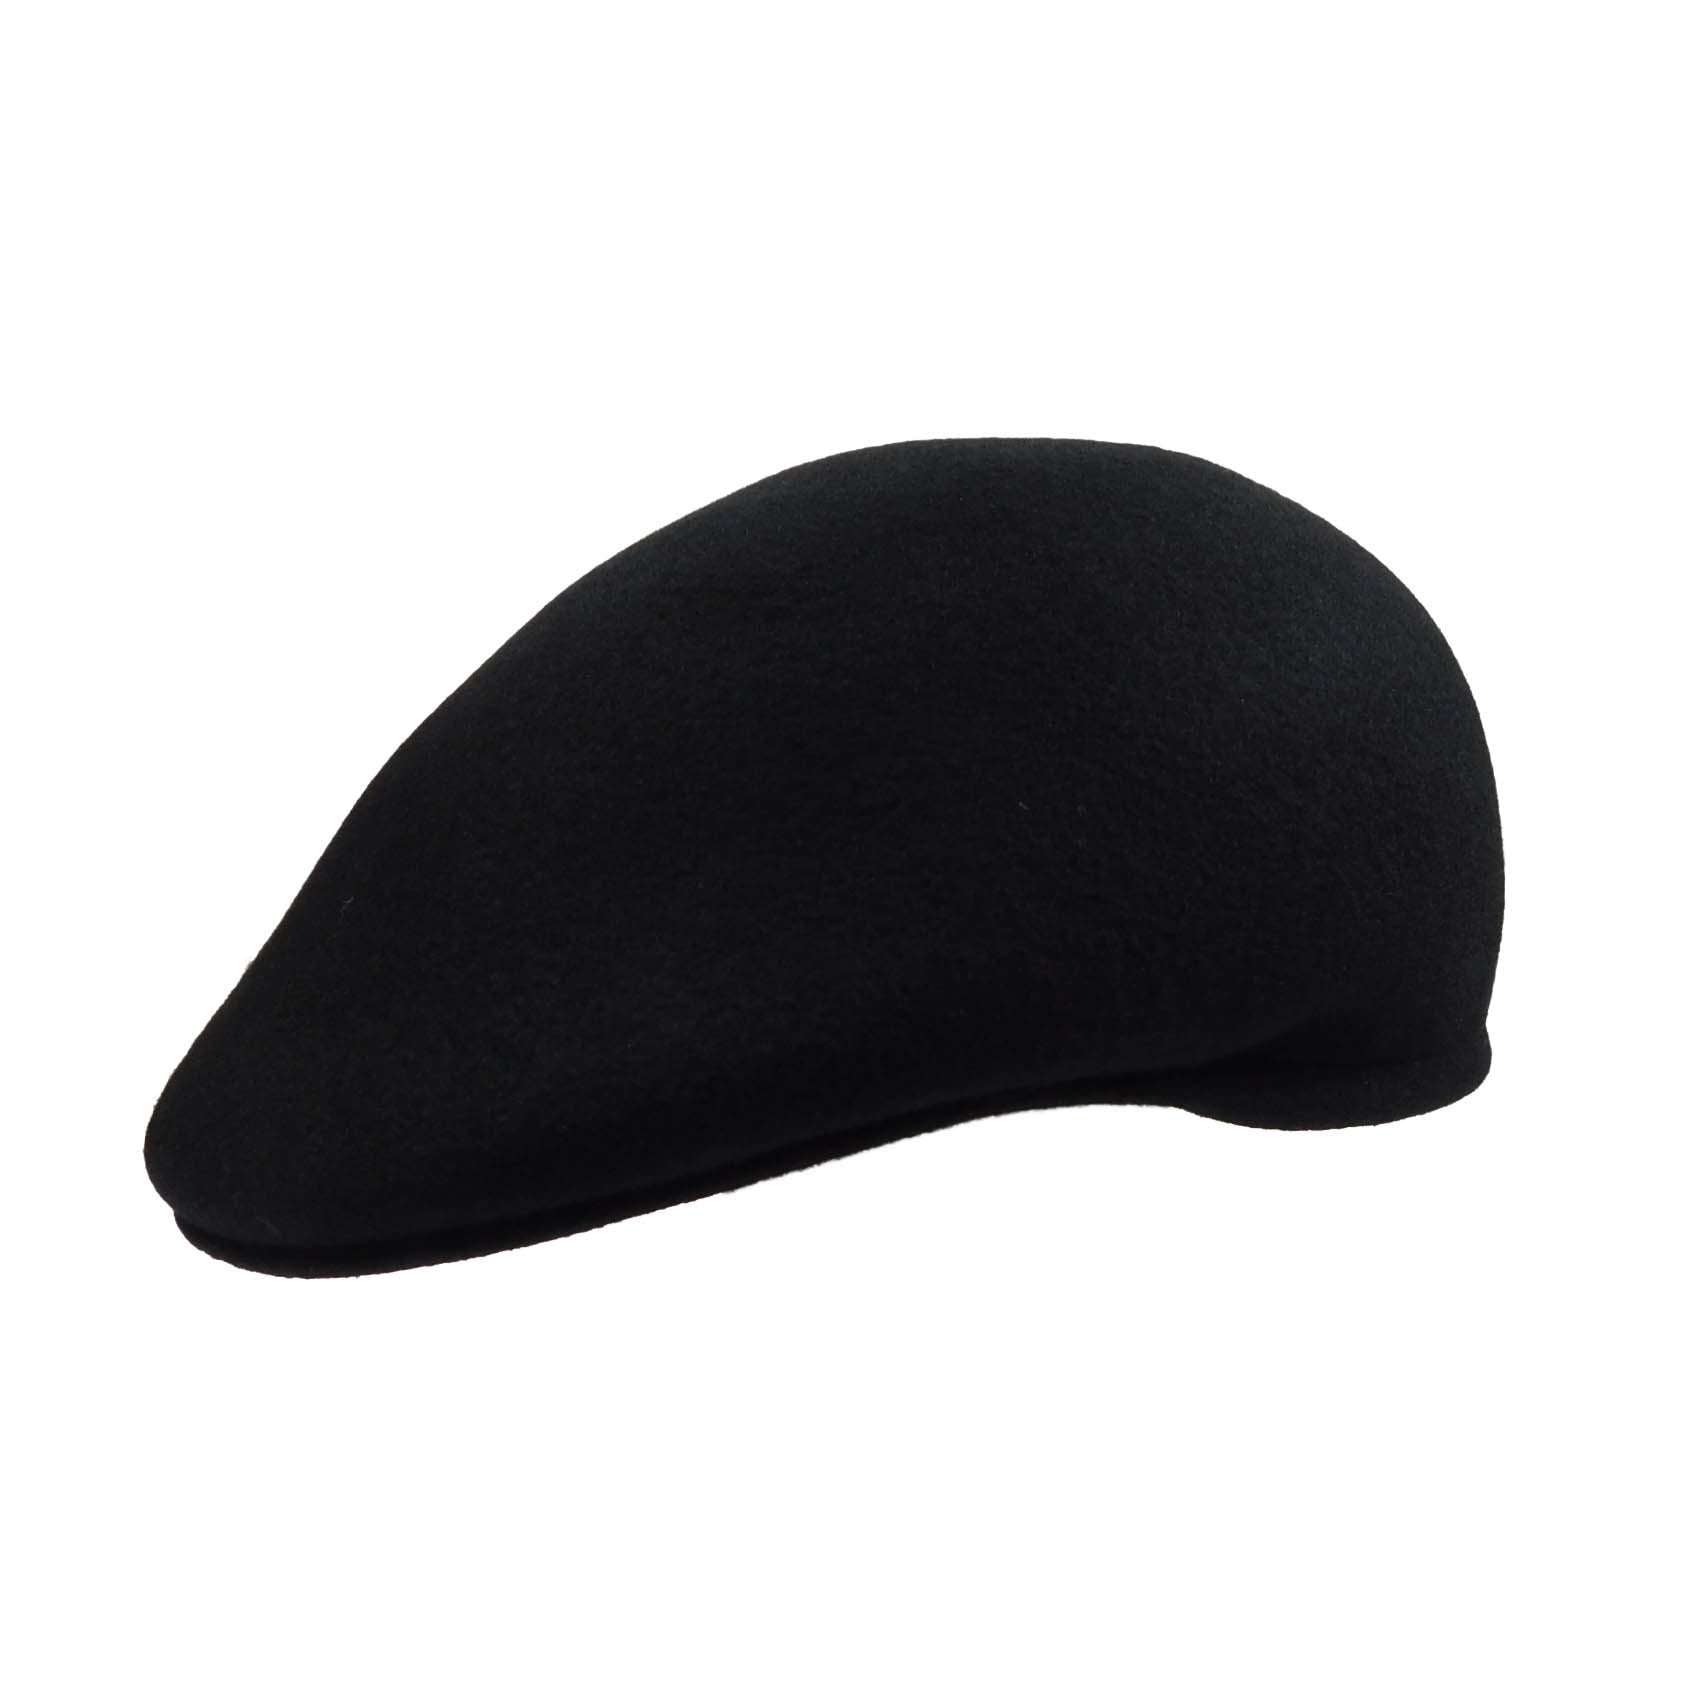 Wool Felt Ascot - Karen Keith Hats Flat Cap Great hats by Karen Keith MWWF951BKM Black M 